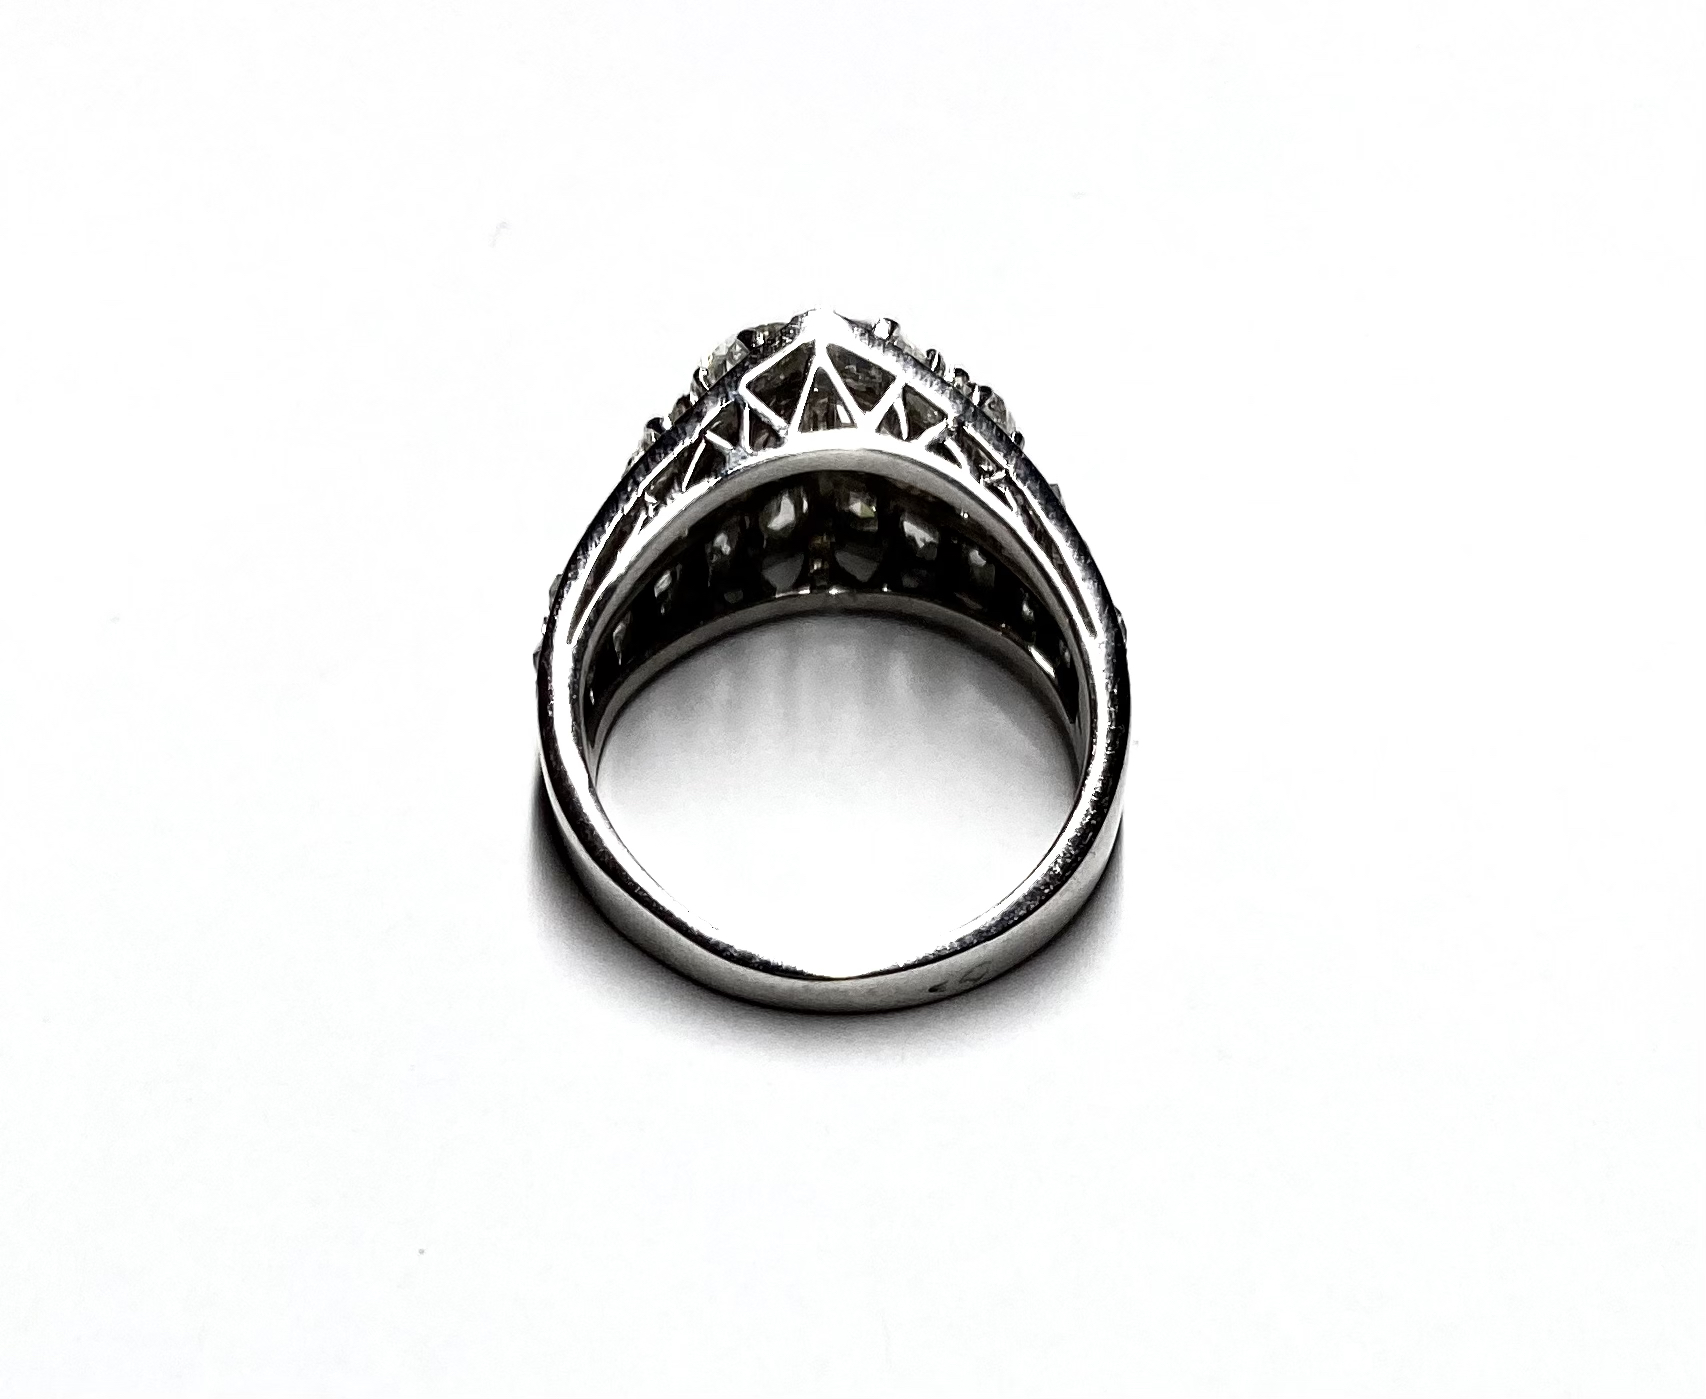 French diamond ring (1.40 carat) circa 1935-2